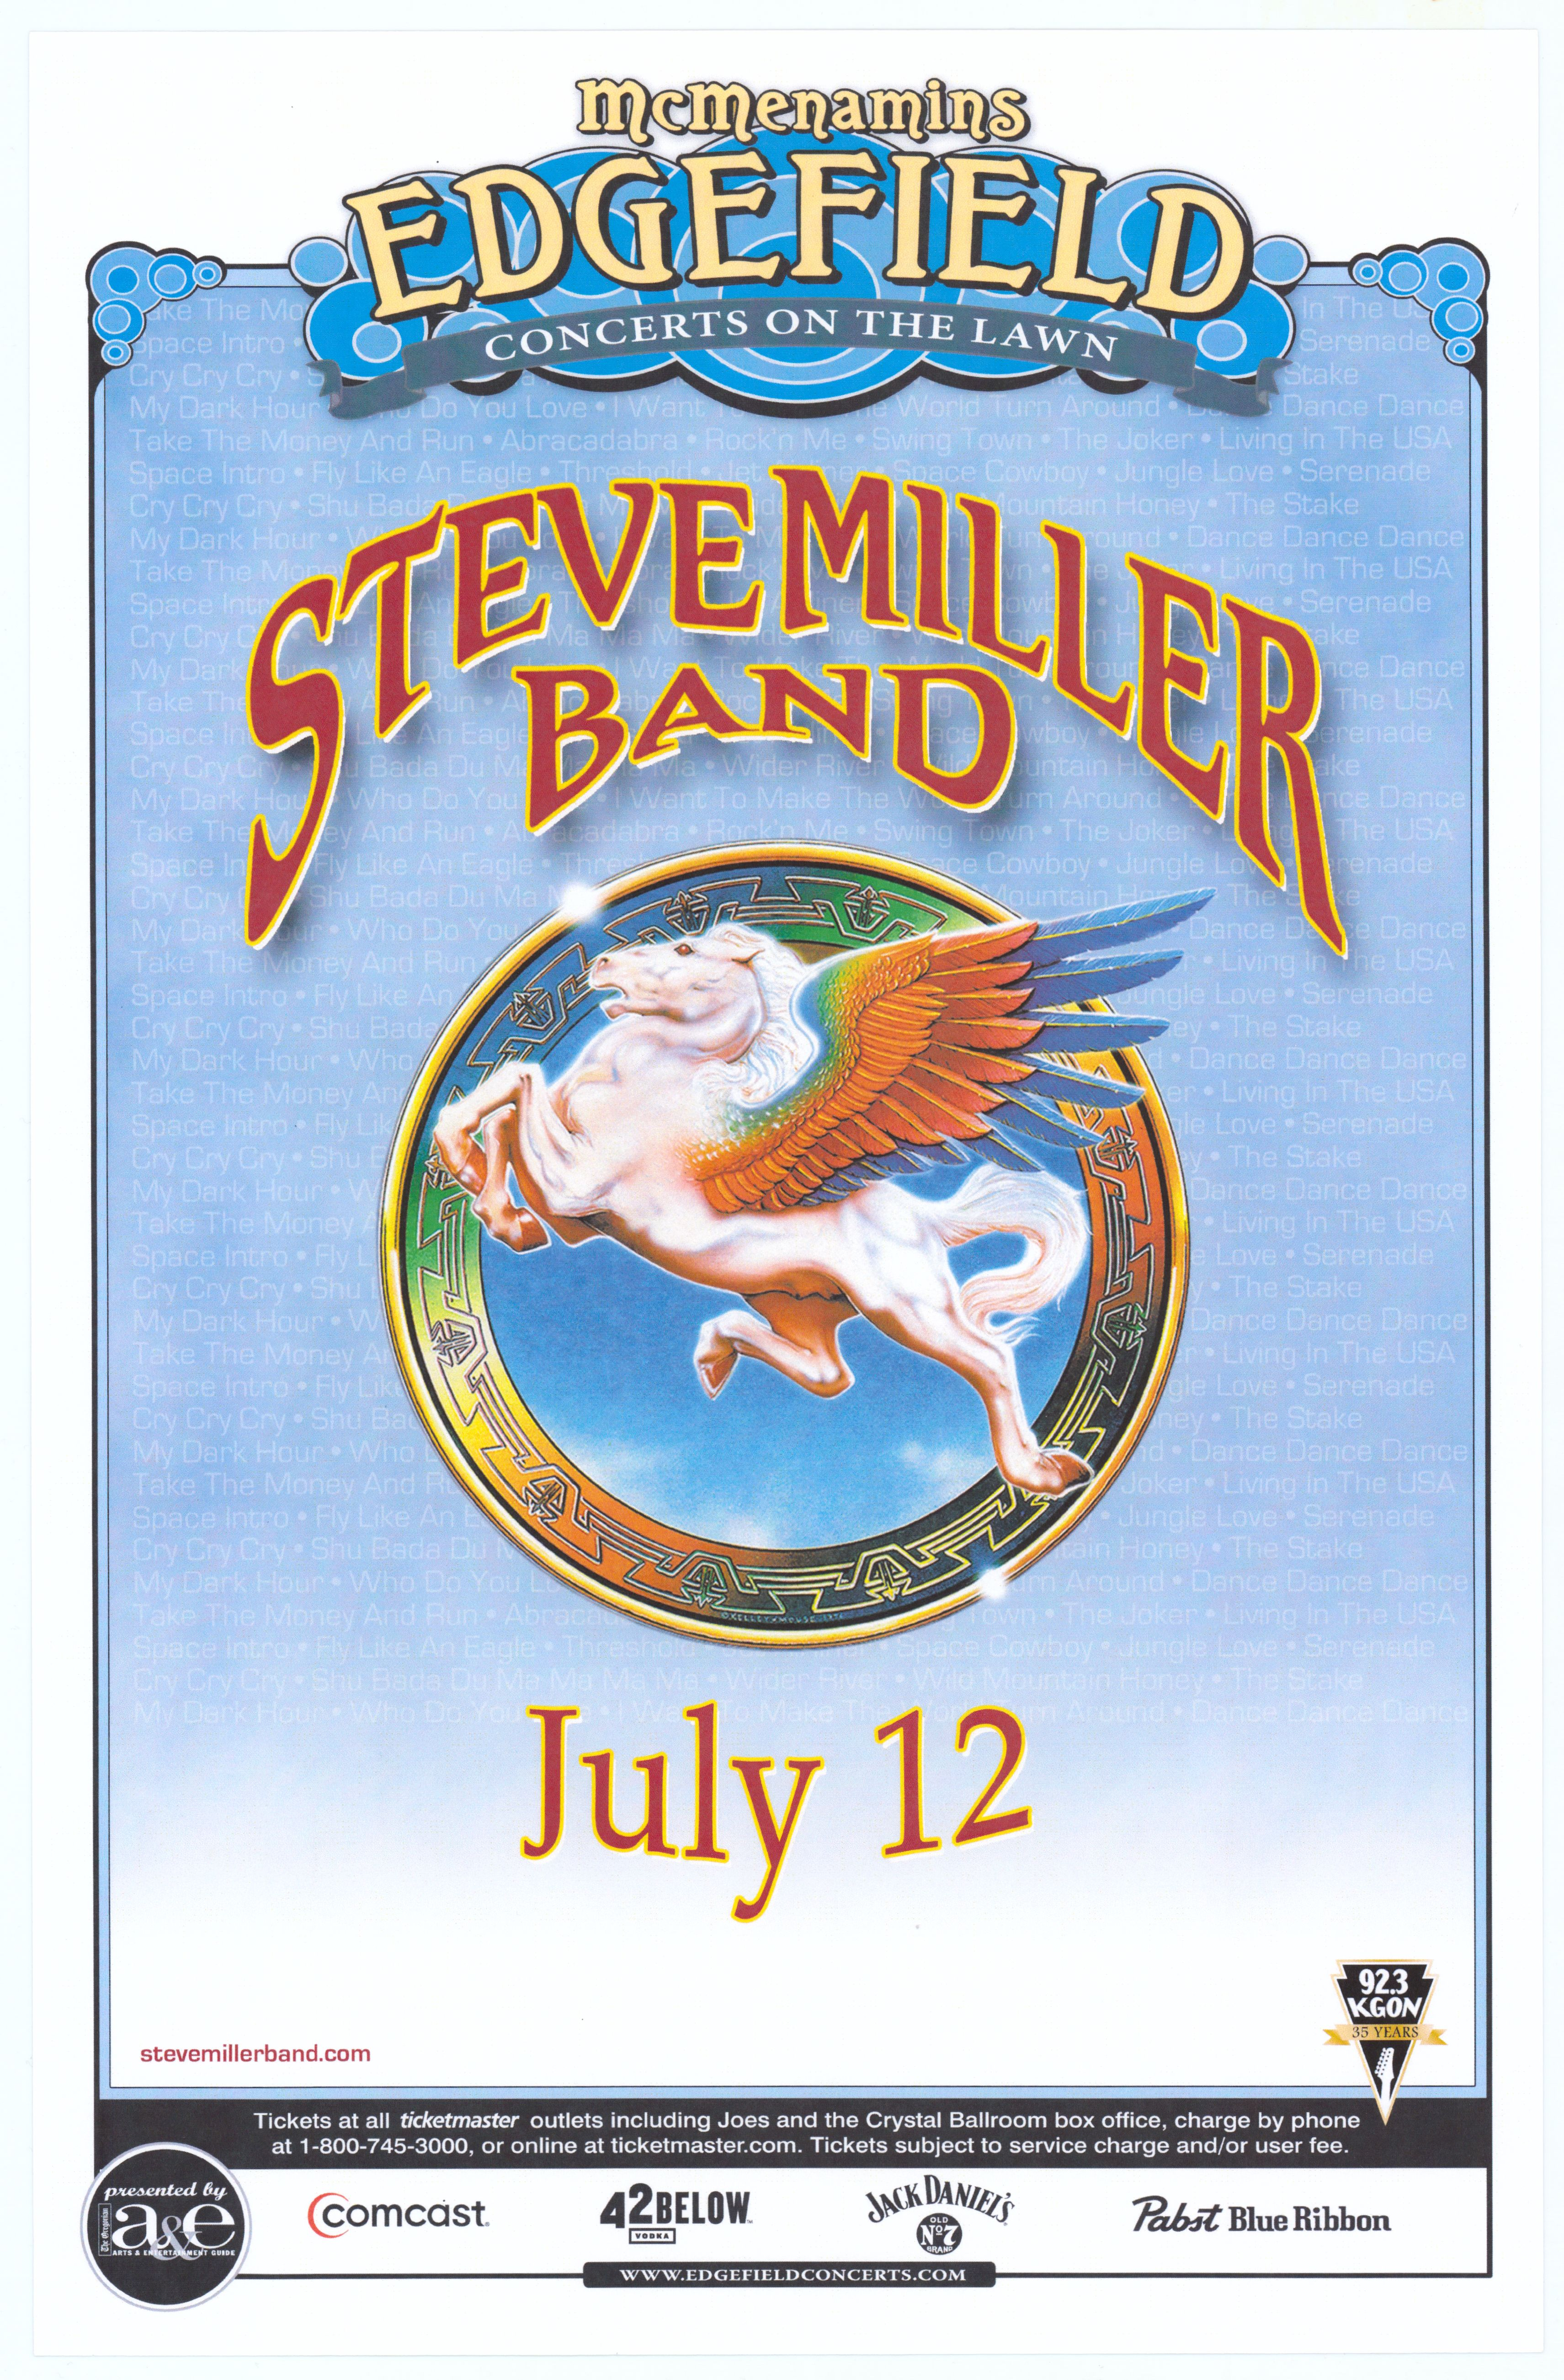 Steve Miller Band McMenamins Edgefield 2010 Concert Poster